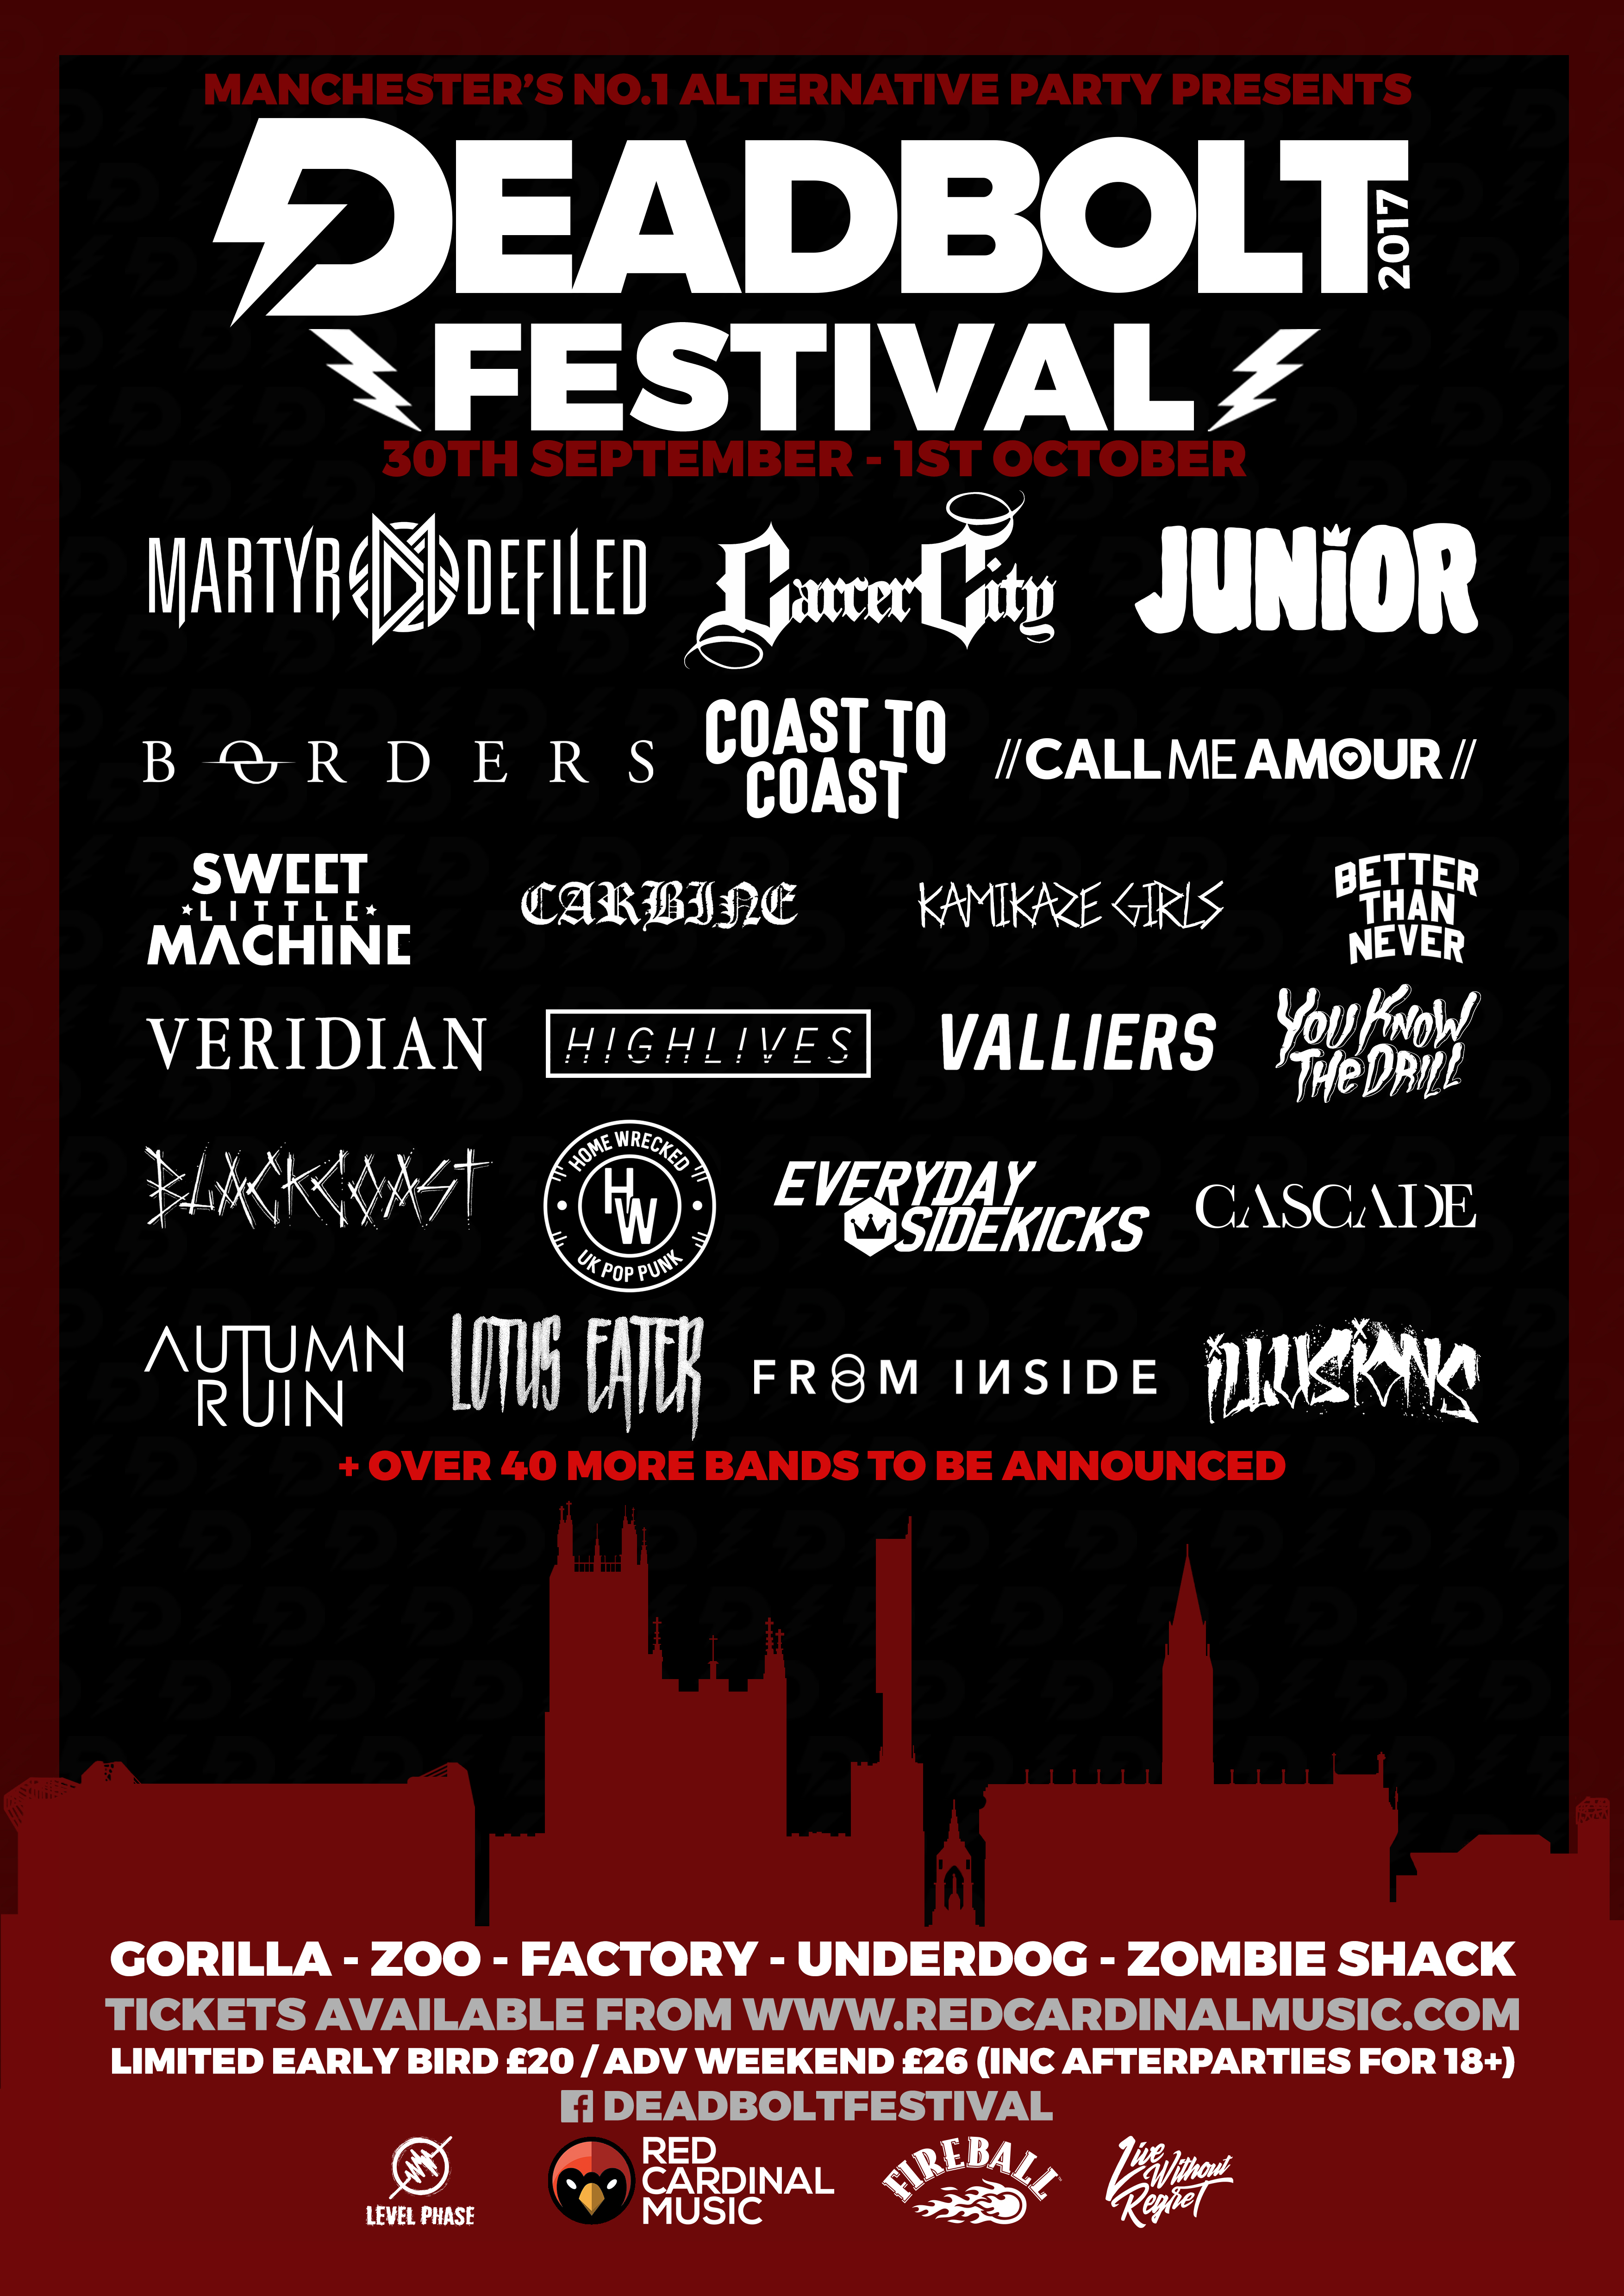 Deadbolt Festival 2017 Announcement 1 - RGB for web use - Red Cardinal Music